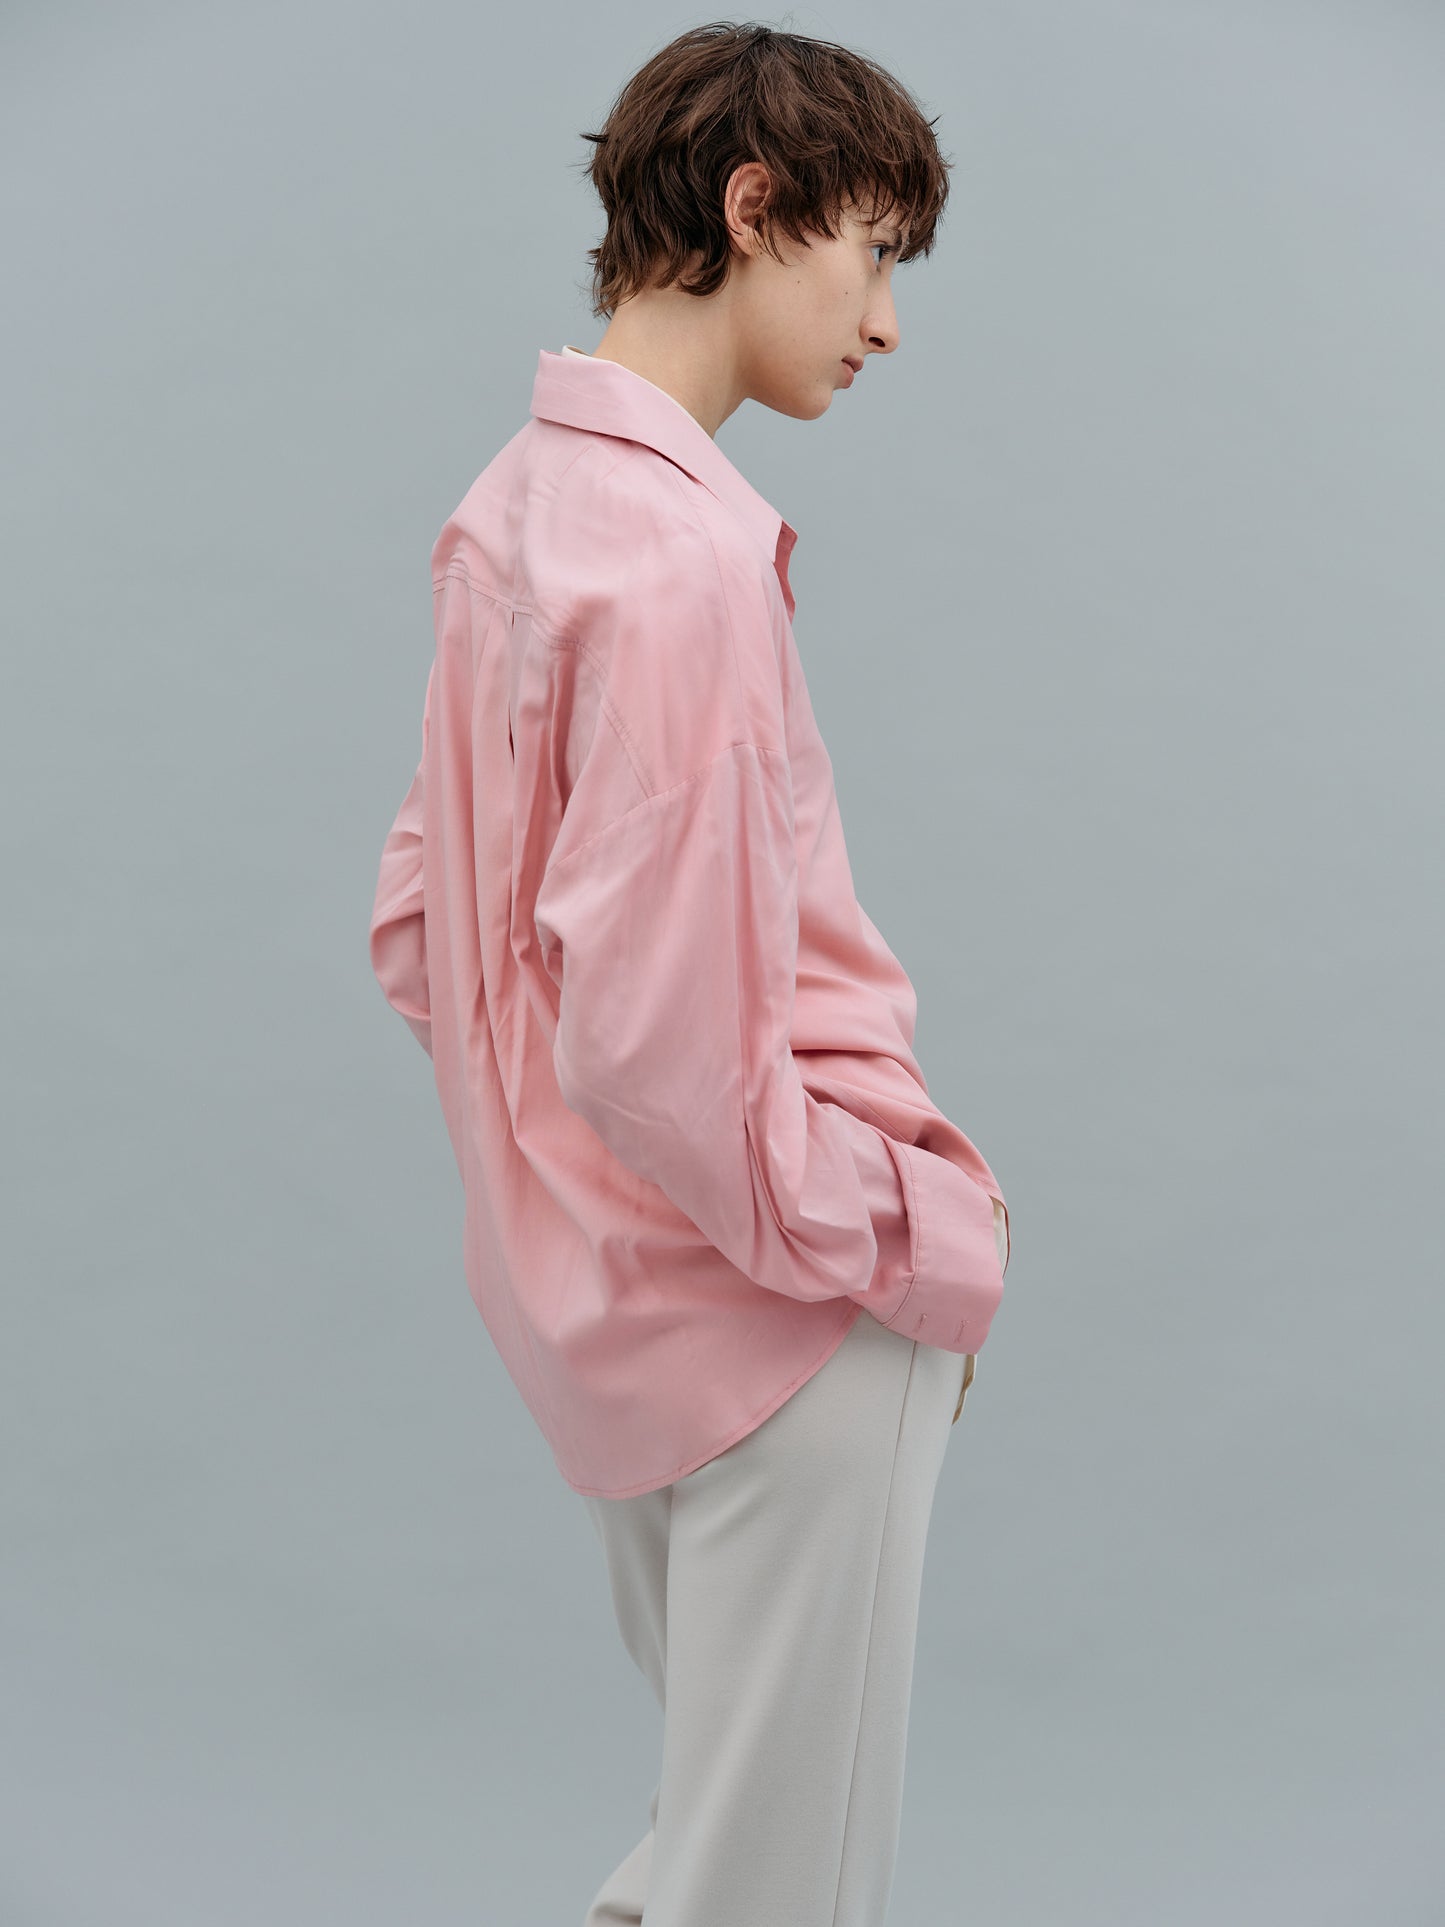 Double Layered Shirt, Cream & Pink